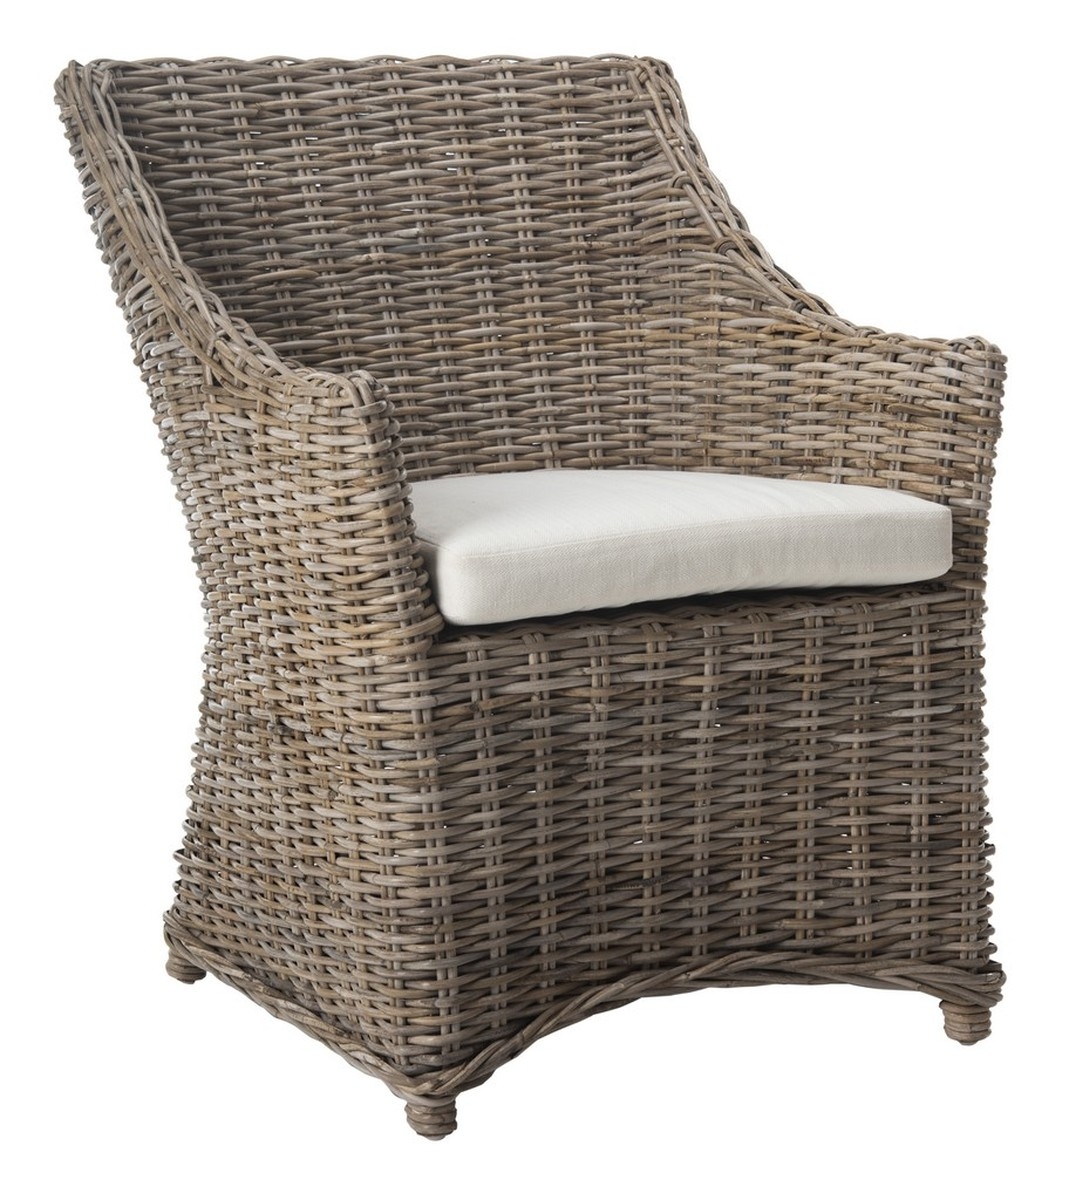 Ventura Rattan Arm Chair - Brown/White - Arlo Home - Image 1